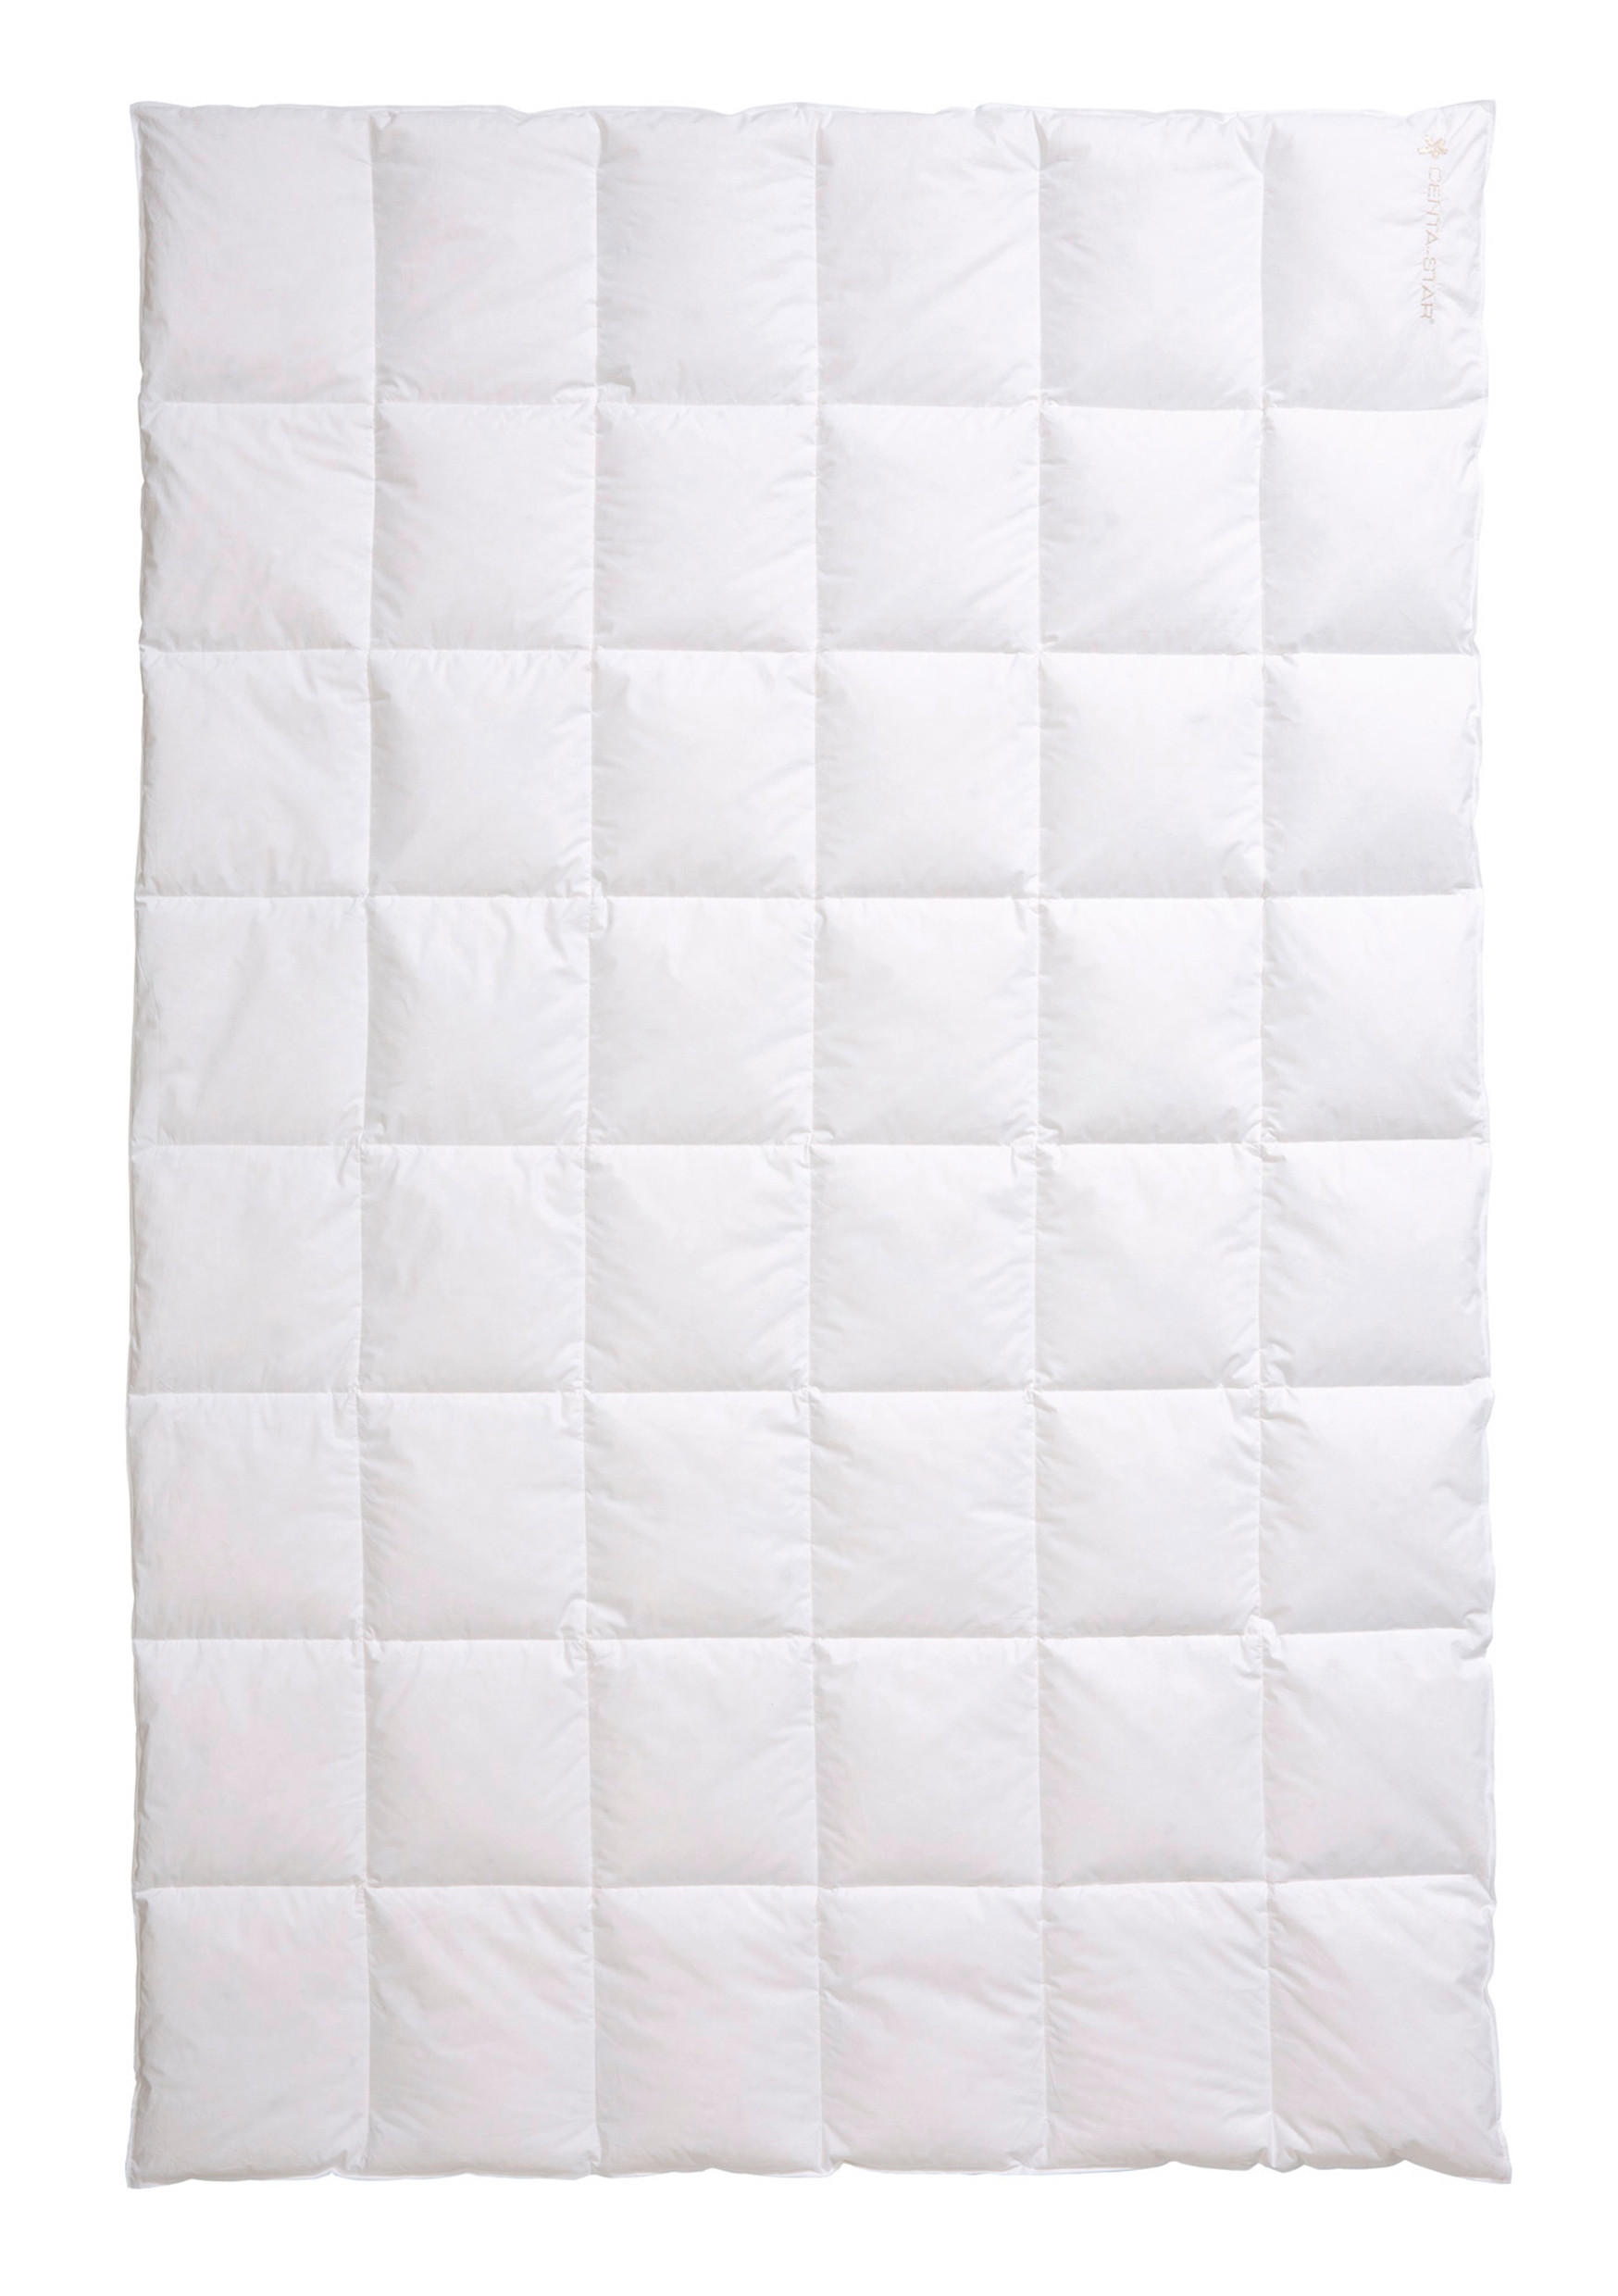 SOMMERBETT  Harmony  155/220 cm   - Weiß, Basics, Textil (155/220cm) - Centa-Star